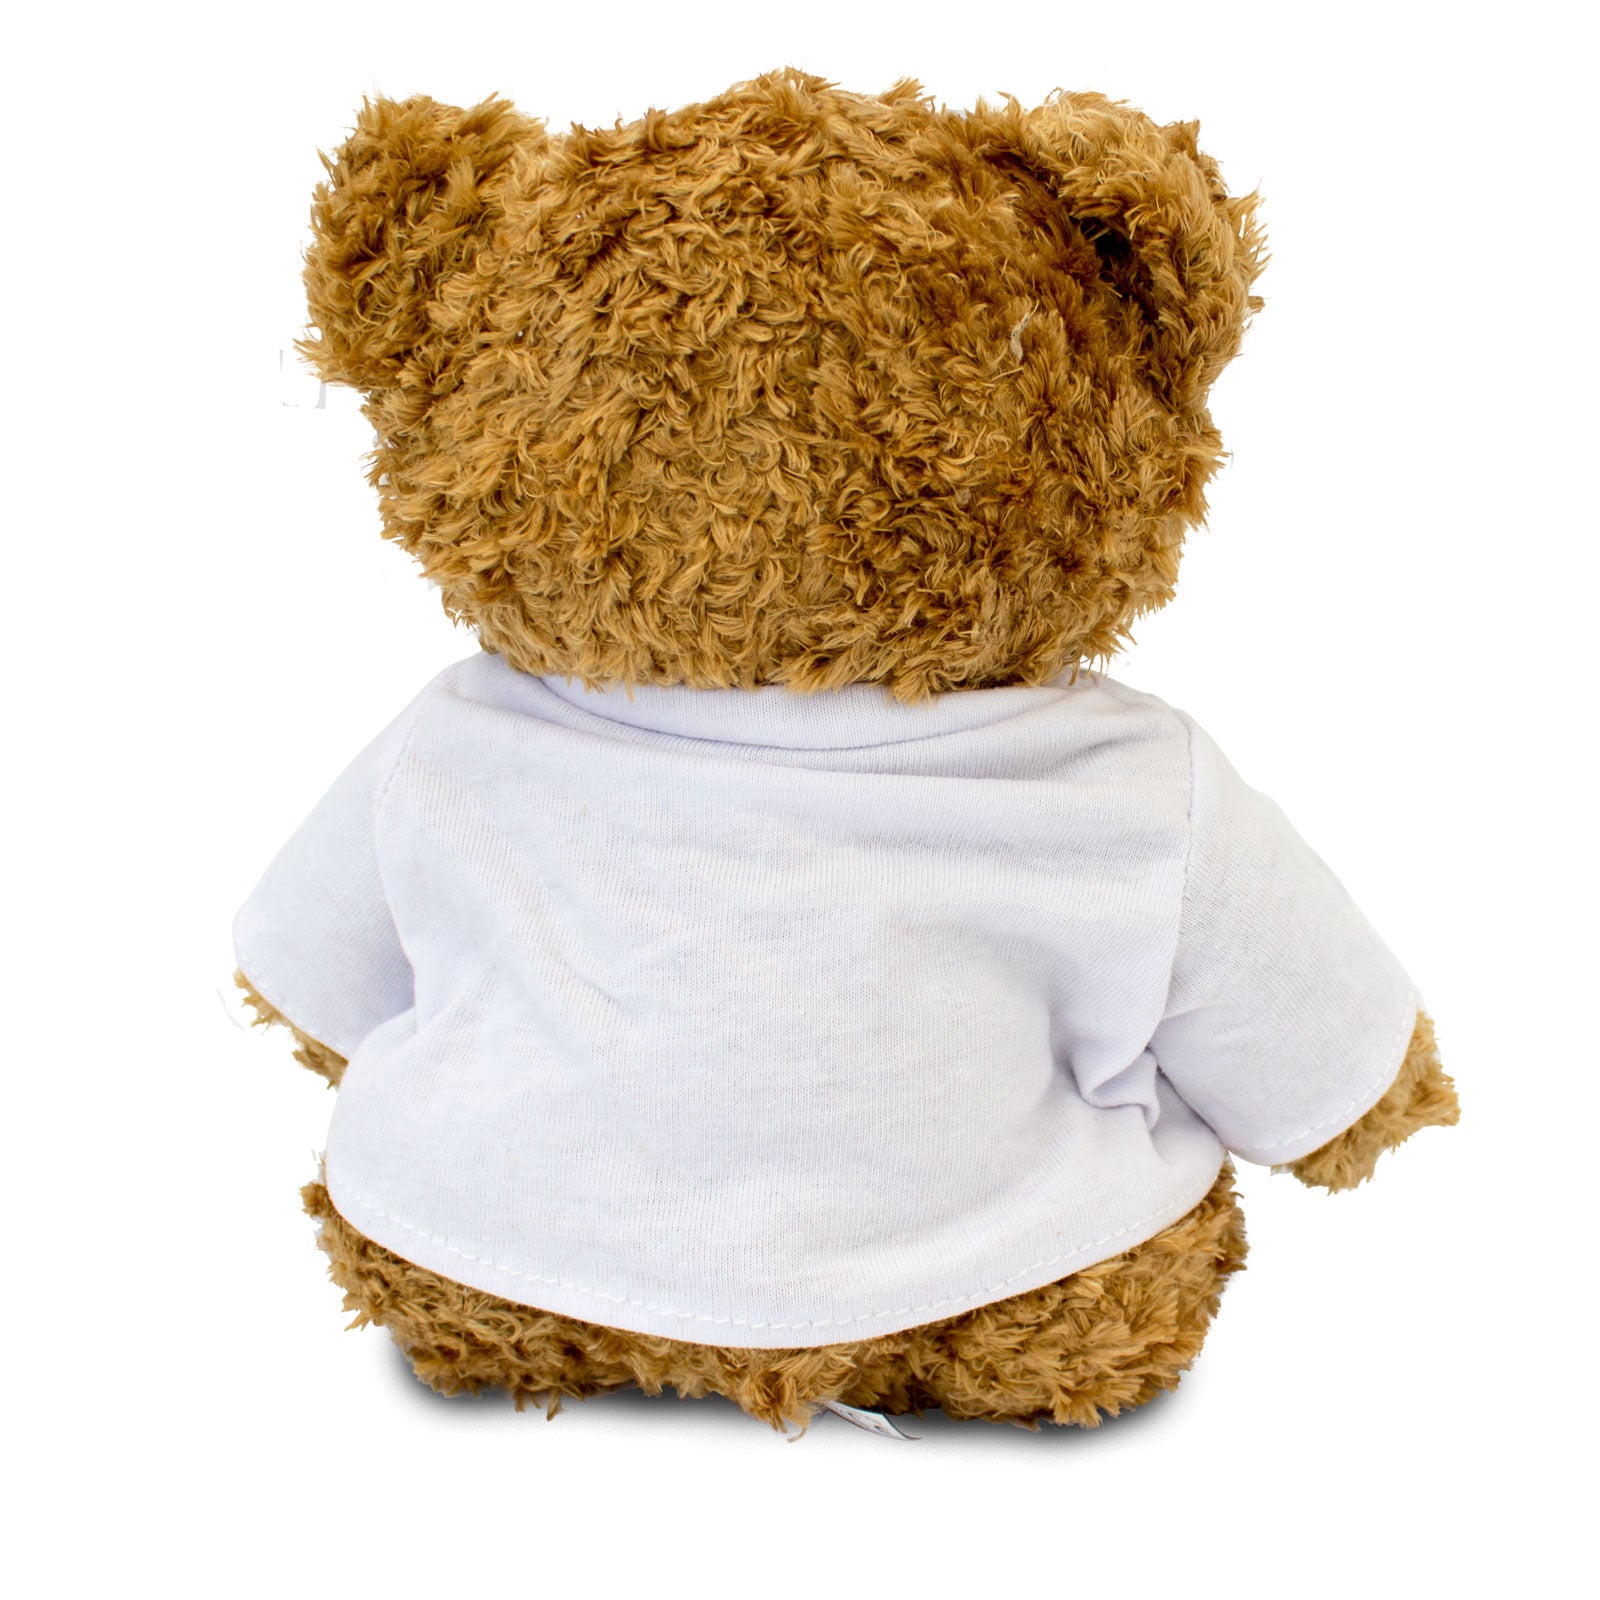 Get Well Soon Glen - Teddy Bear